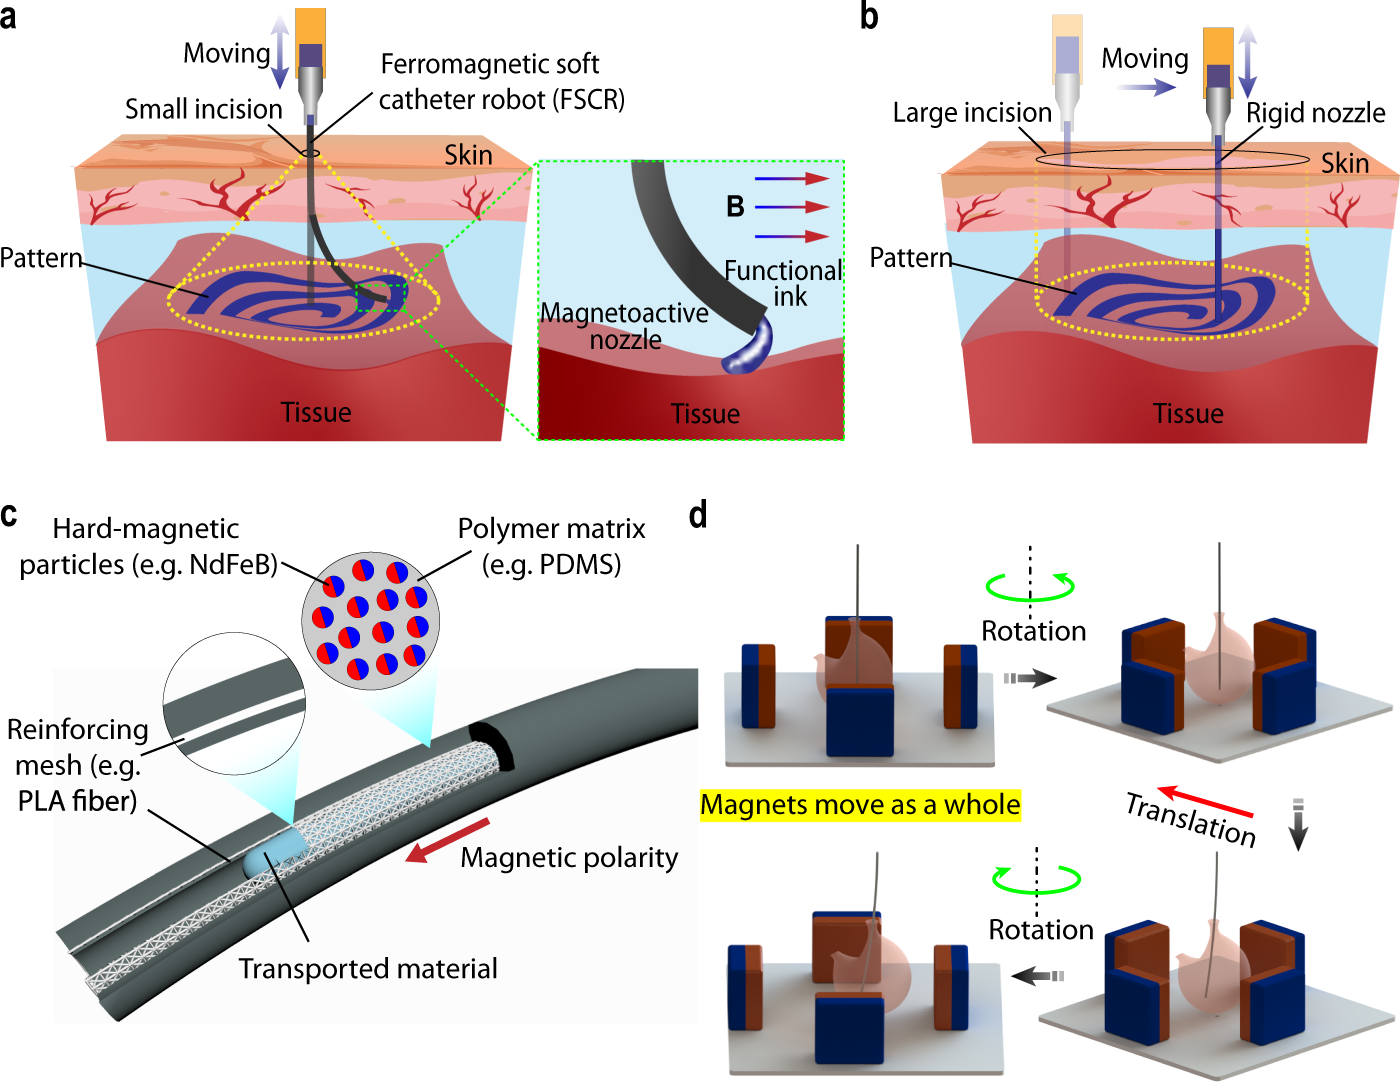 Ferromagnetic soft catheter robots for minimally invasive bioprinting |  Nature Communications